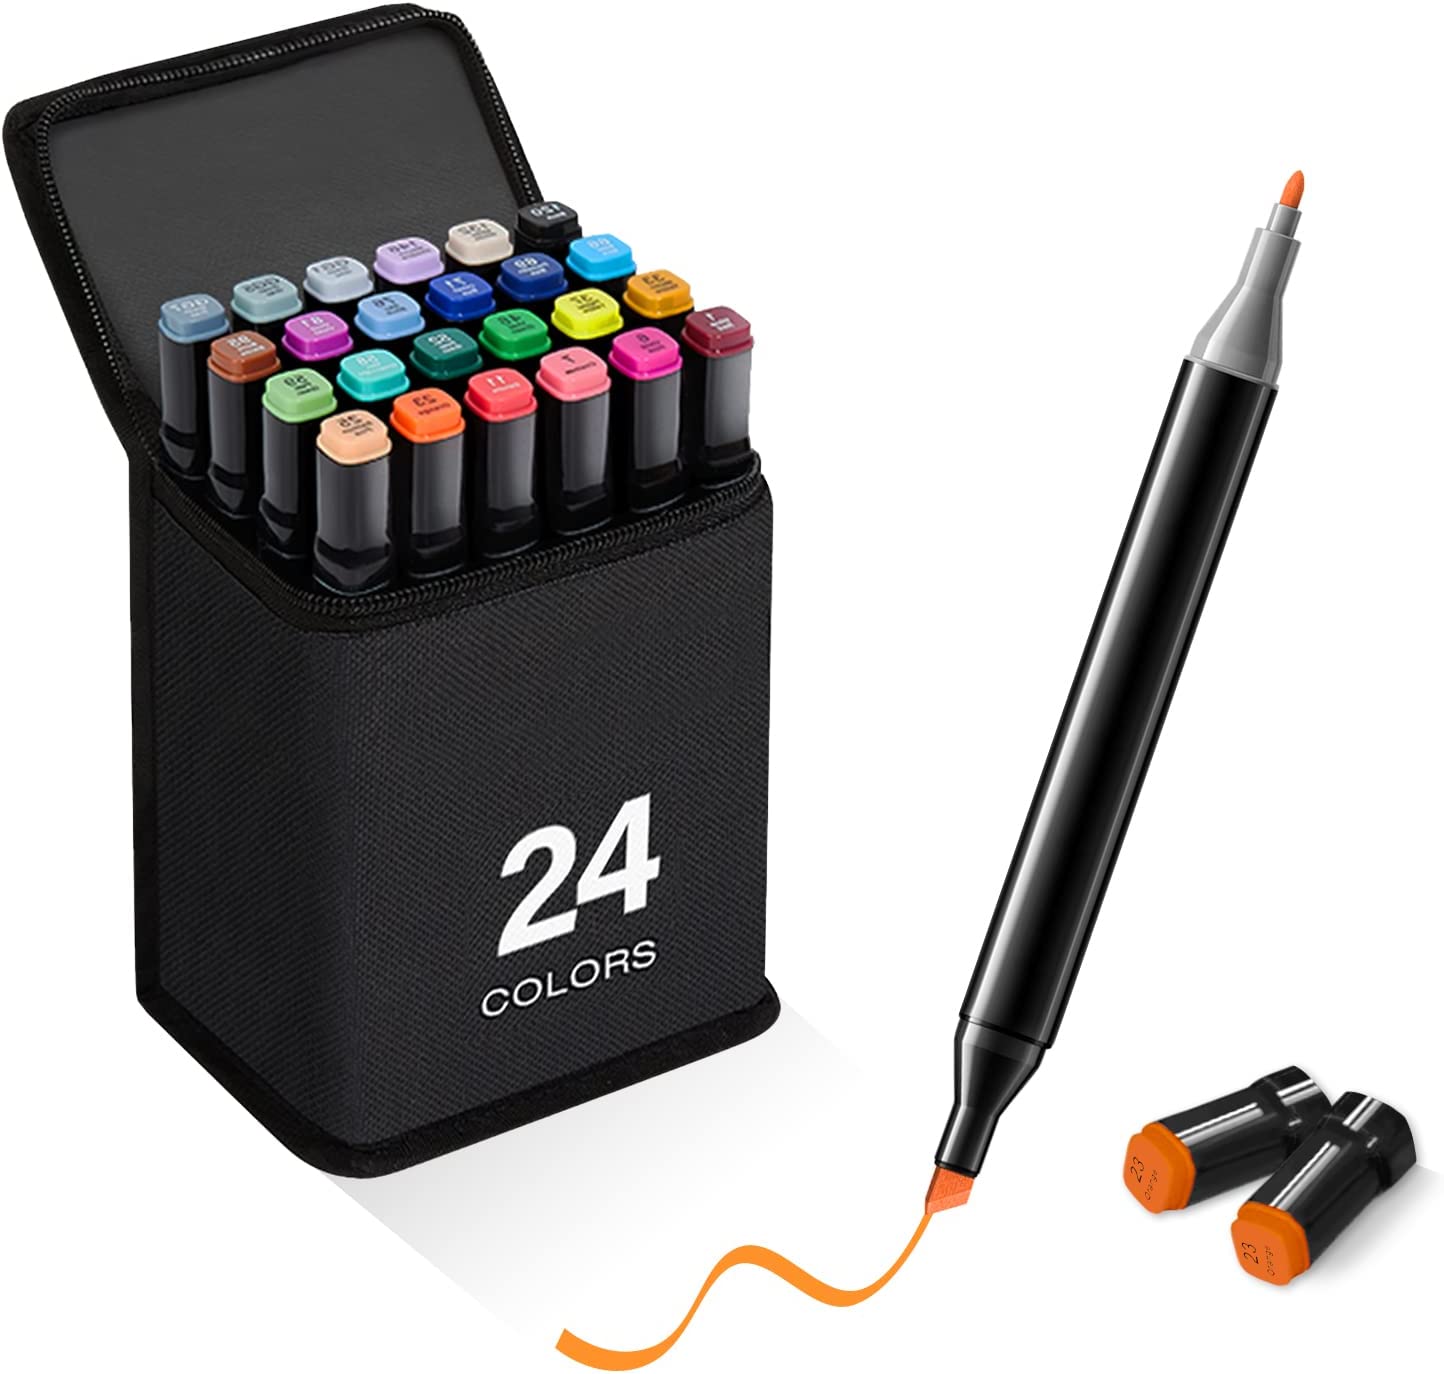 STOBOK 40pcs Gel Pen Colored Ink Pens Colored Gel Pens, 56% OFF